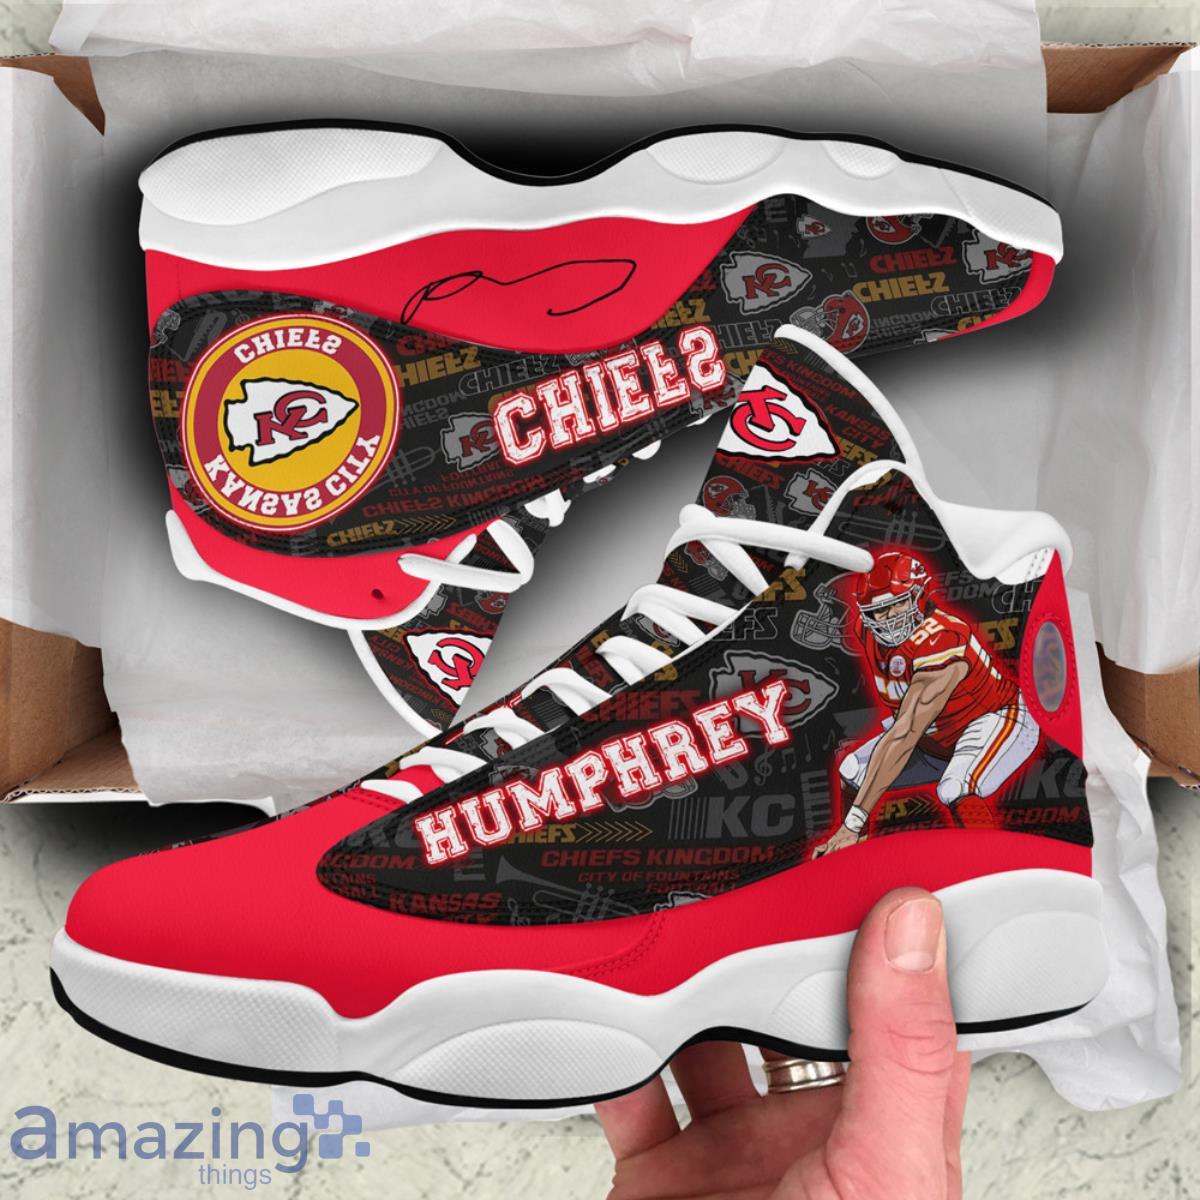 Kansas City Chiefs Creed Humphrey Air Jordan 13 Shoes For Men Women Product Photo 2